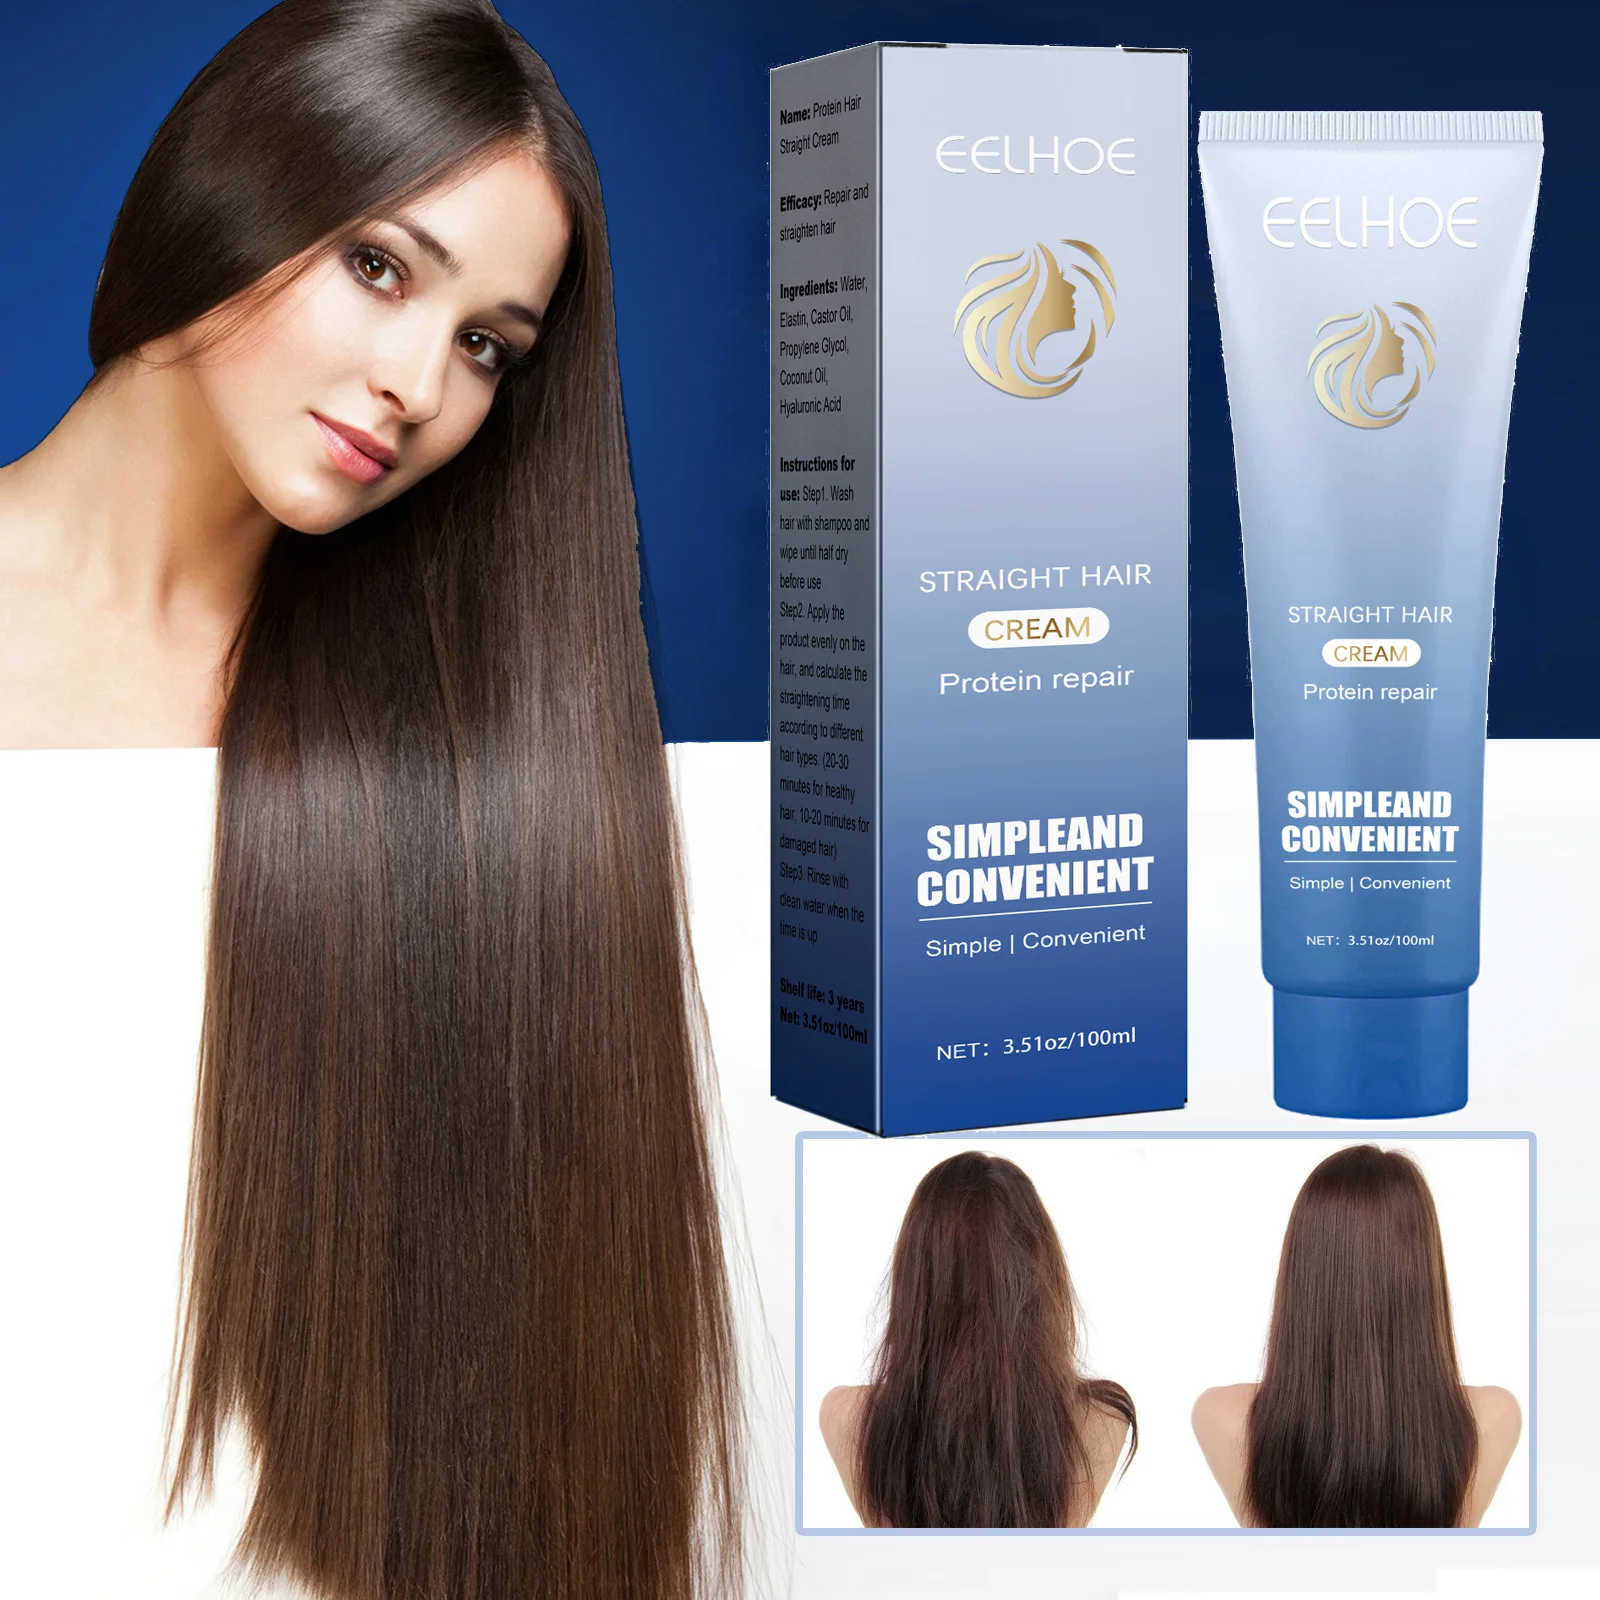 Gentle Straight Hair Cream Straightening Hair Softener For Women Girls 100ml creme de cabelo soin cheveux pour femme